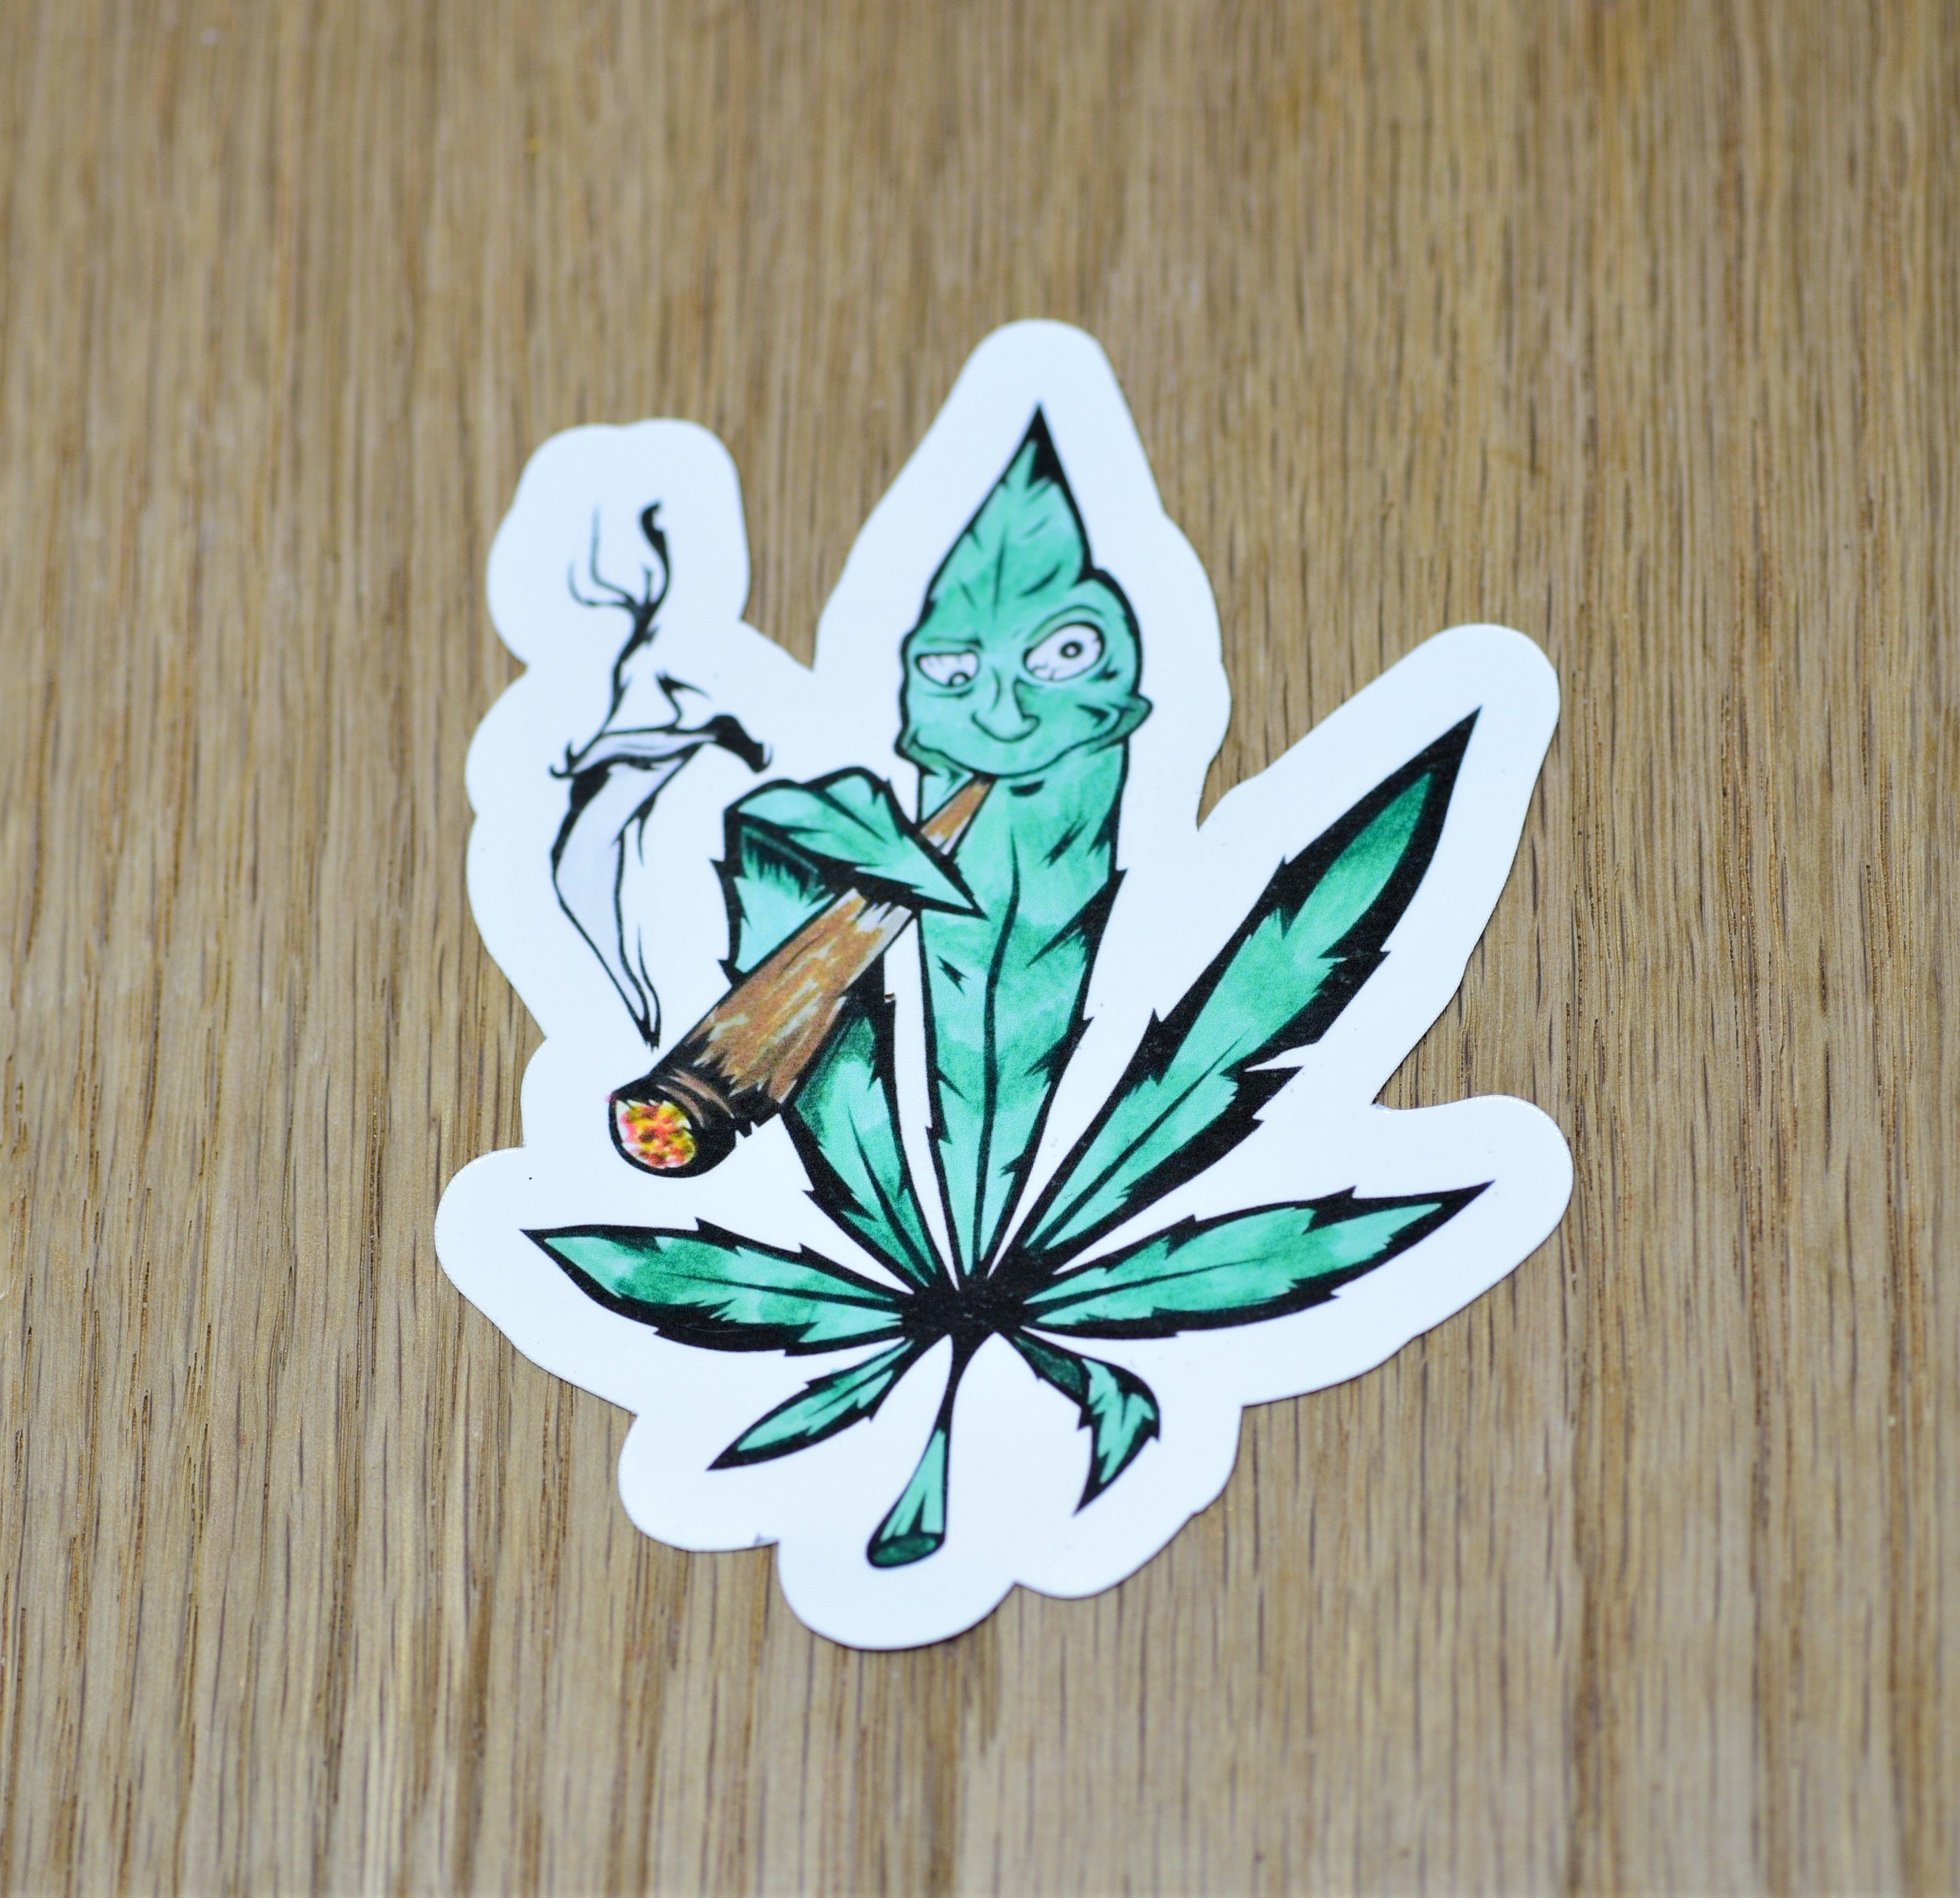 Weed Leaf Smoking a Blunt Vinyl Sticker Weed Sticker Joint